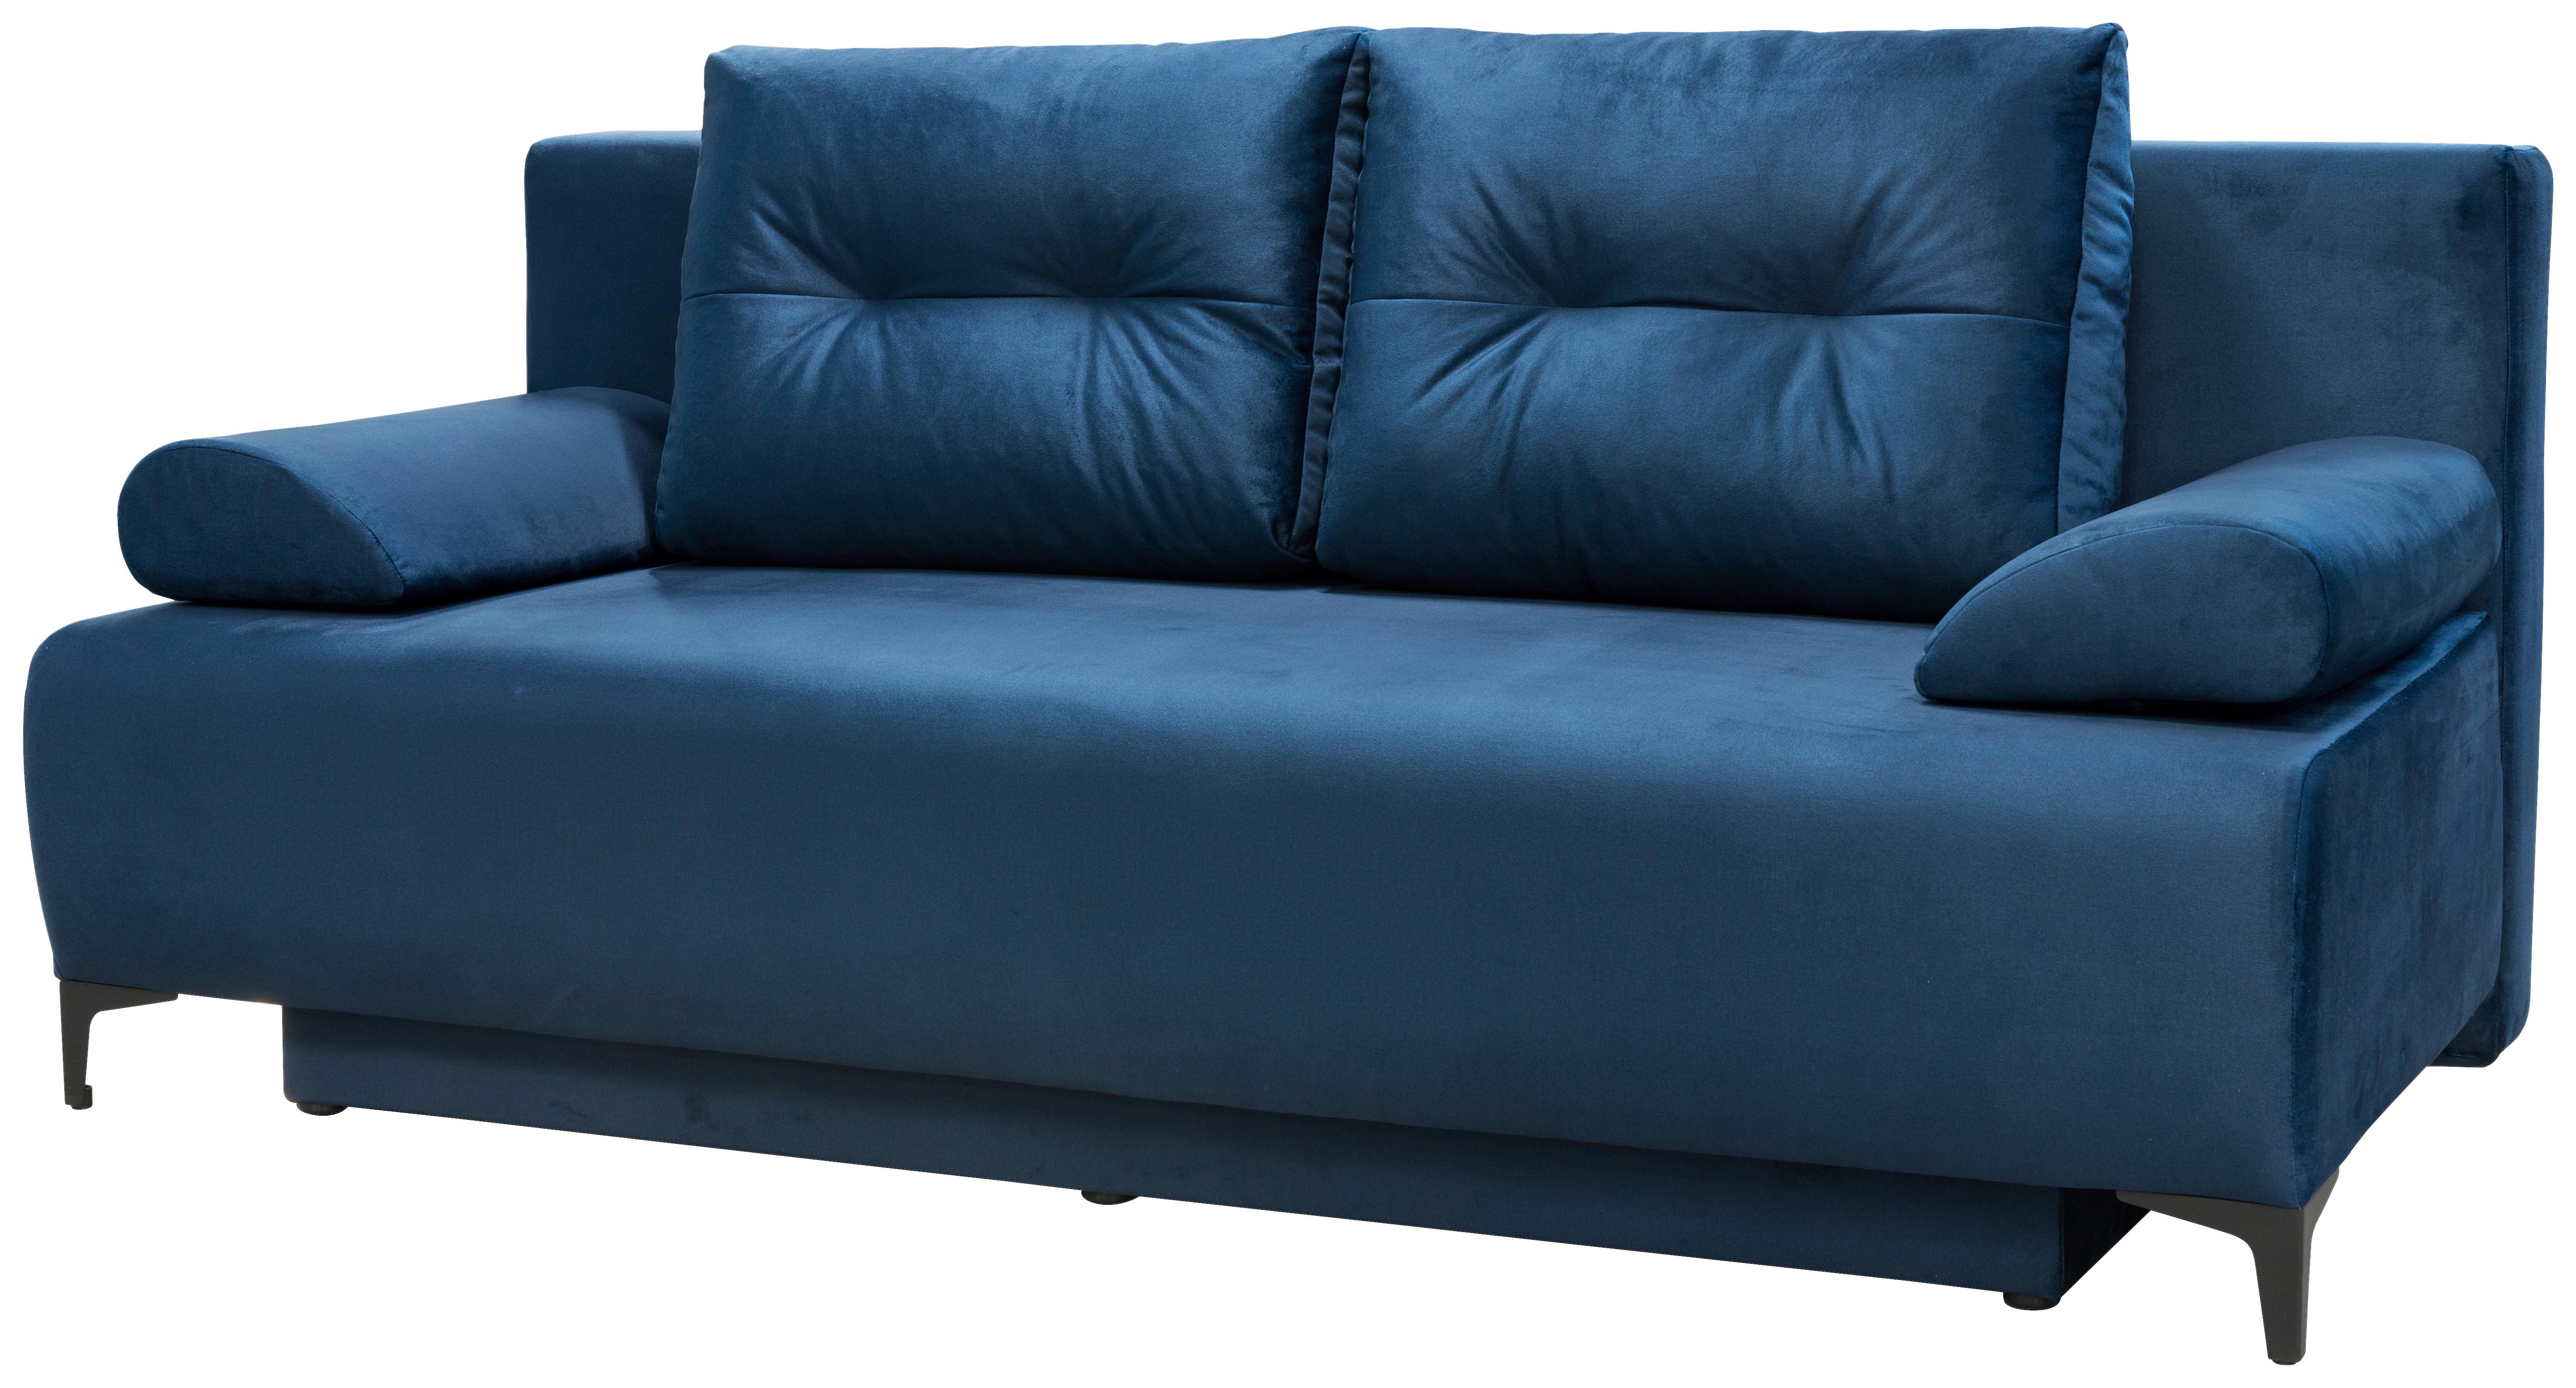 Boxspringová Pohovka Viera - černá/tmavě modrá, Moderní, kov/textil (201/100/105cm)